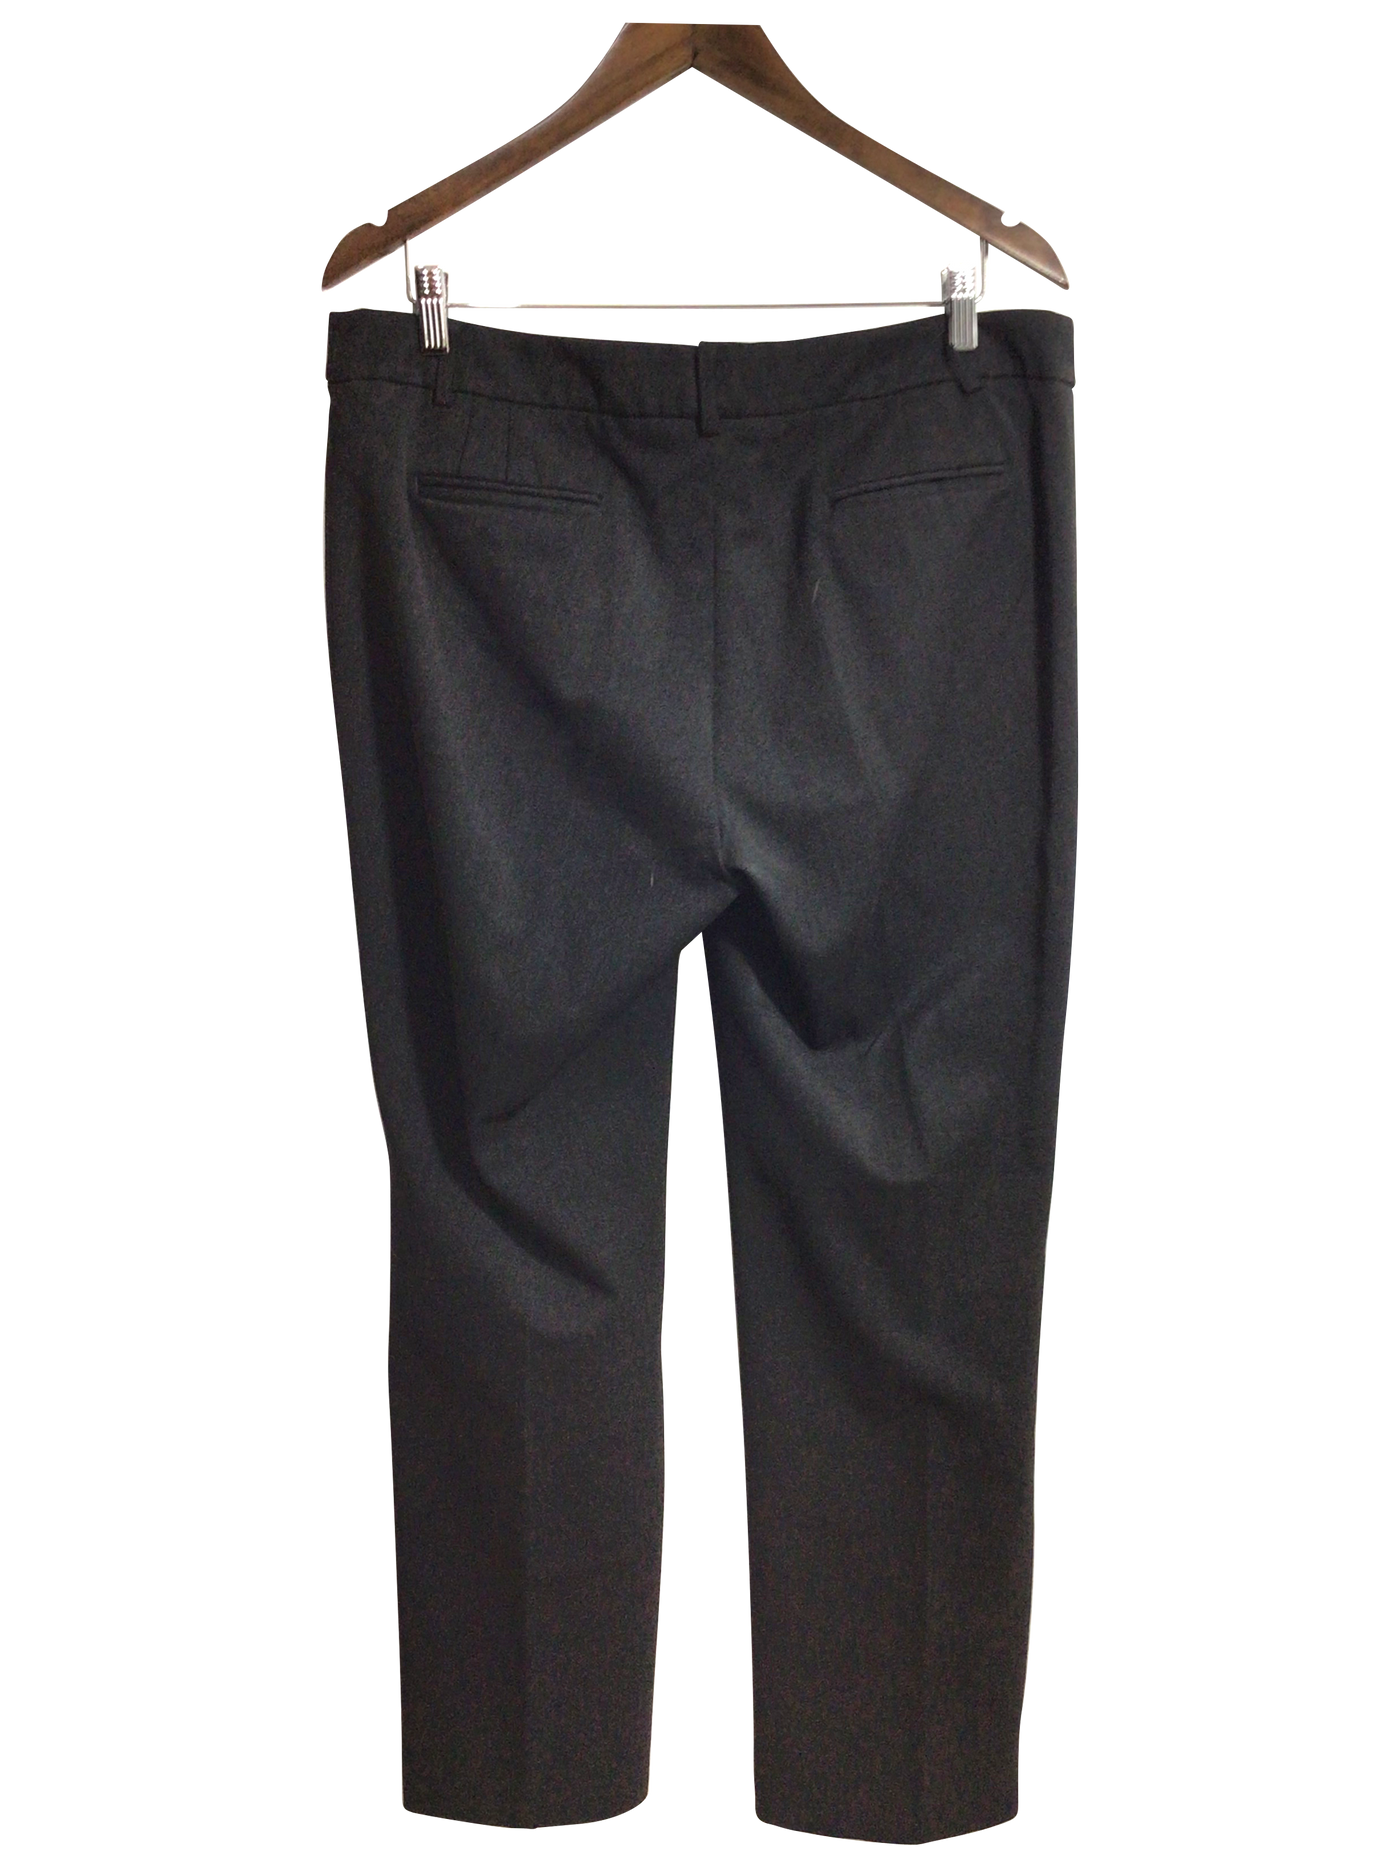 HILARY RADLEY Women Work Pants Regular fit in Black - Size 12X30 | 11.39 $ KOOP